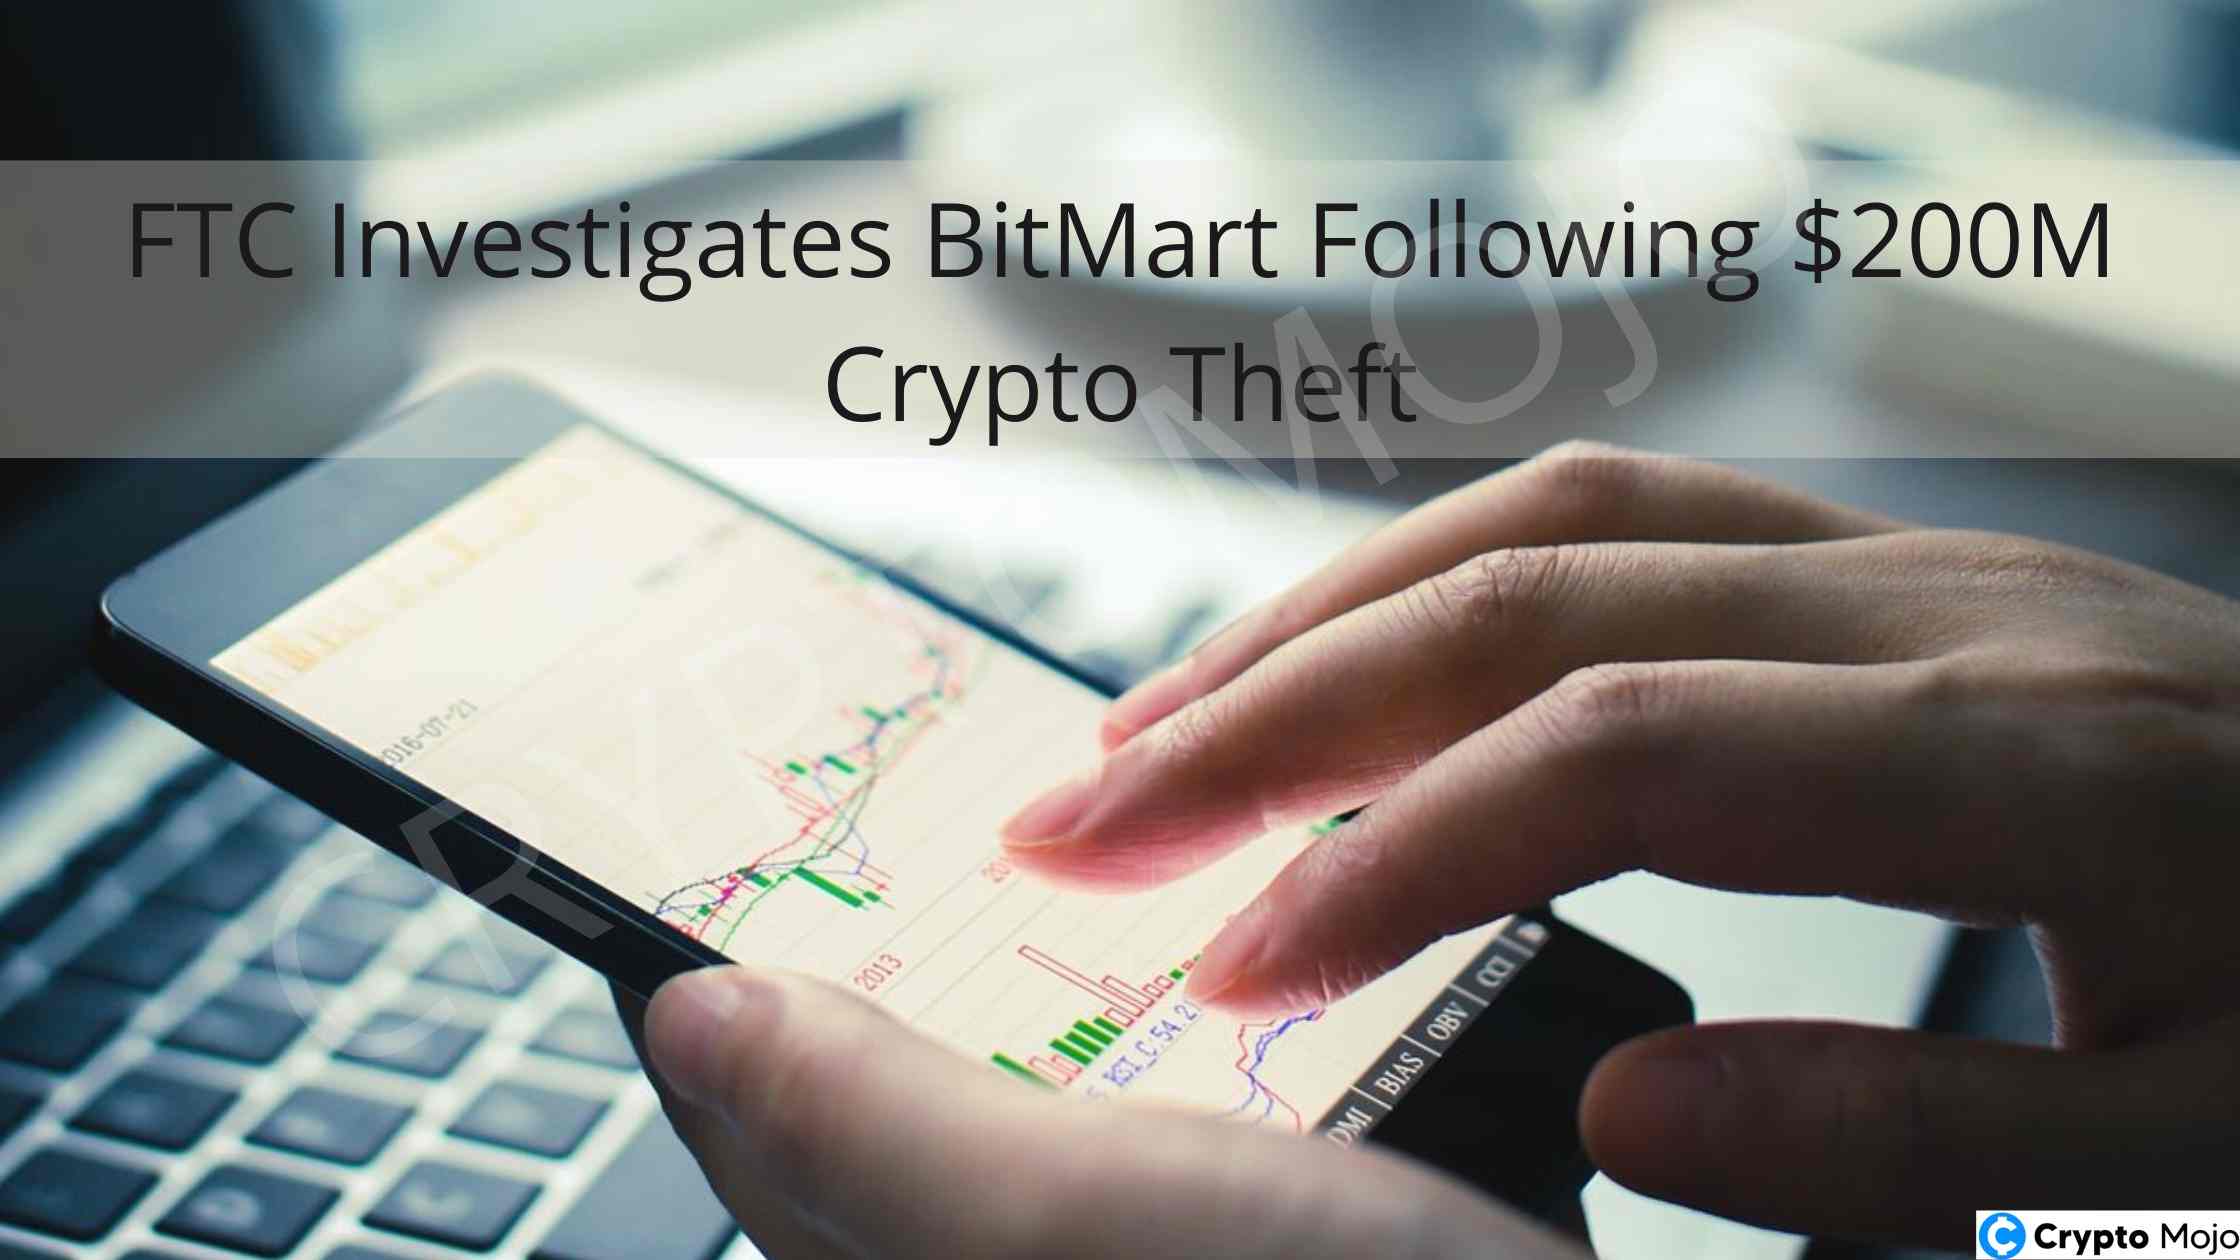 FTC Investigates BitMart Following $200M Crypto Theft